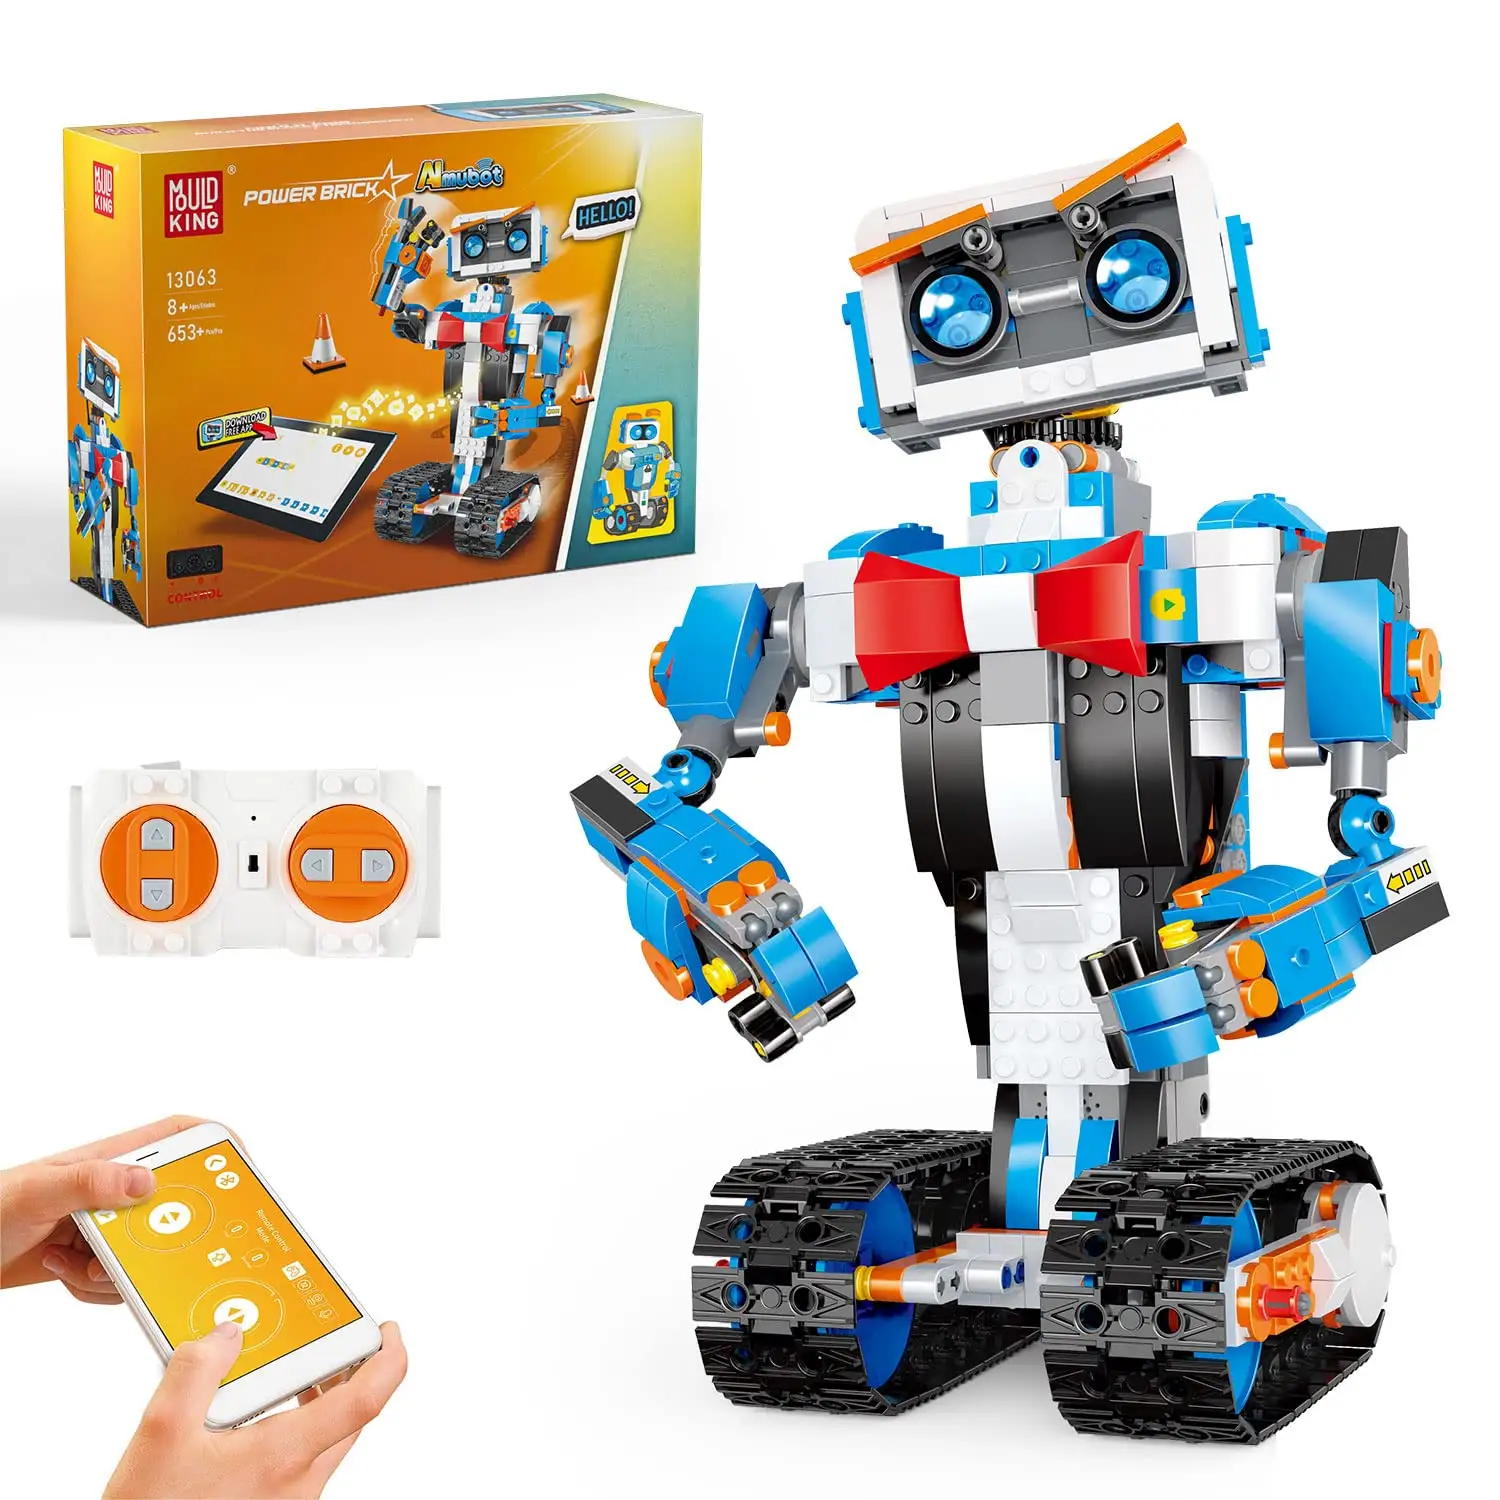 Kids DIY programming toys STEM programmable toys robotics kits robot remote & APP controlled mould king technic kids educational